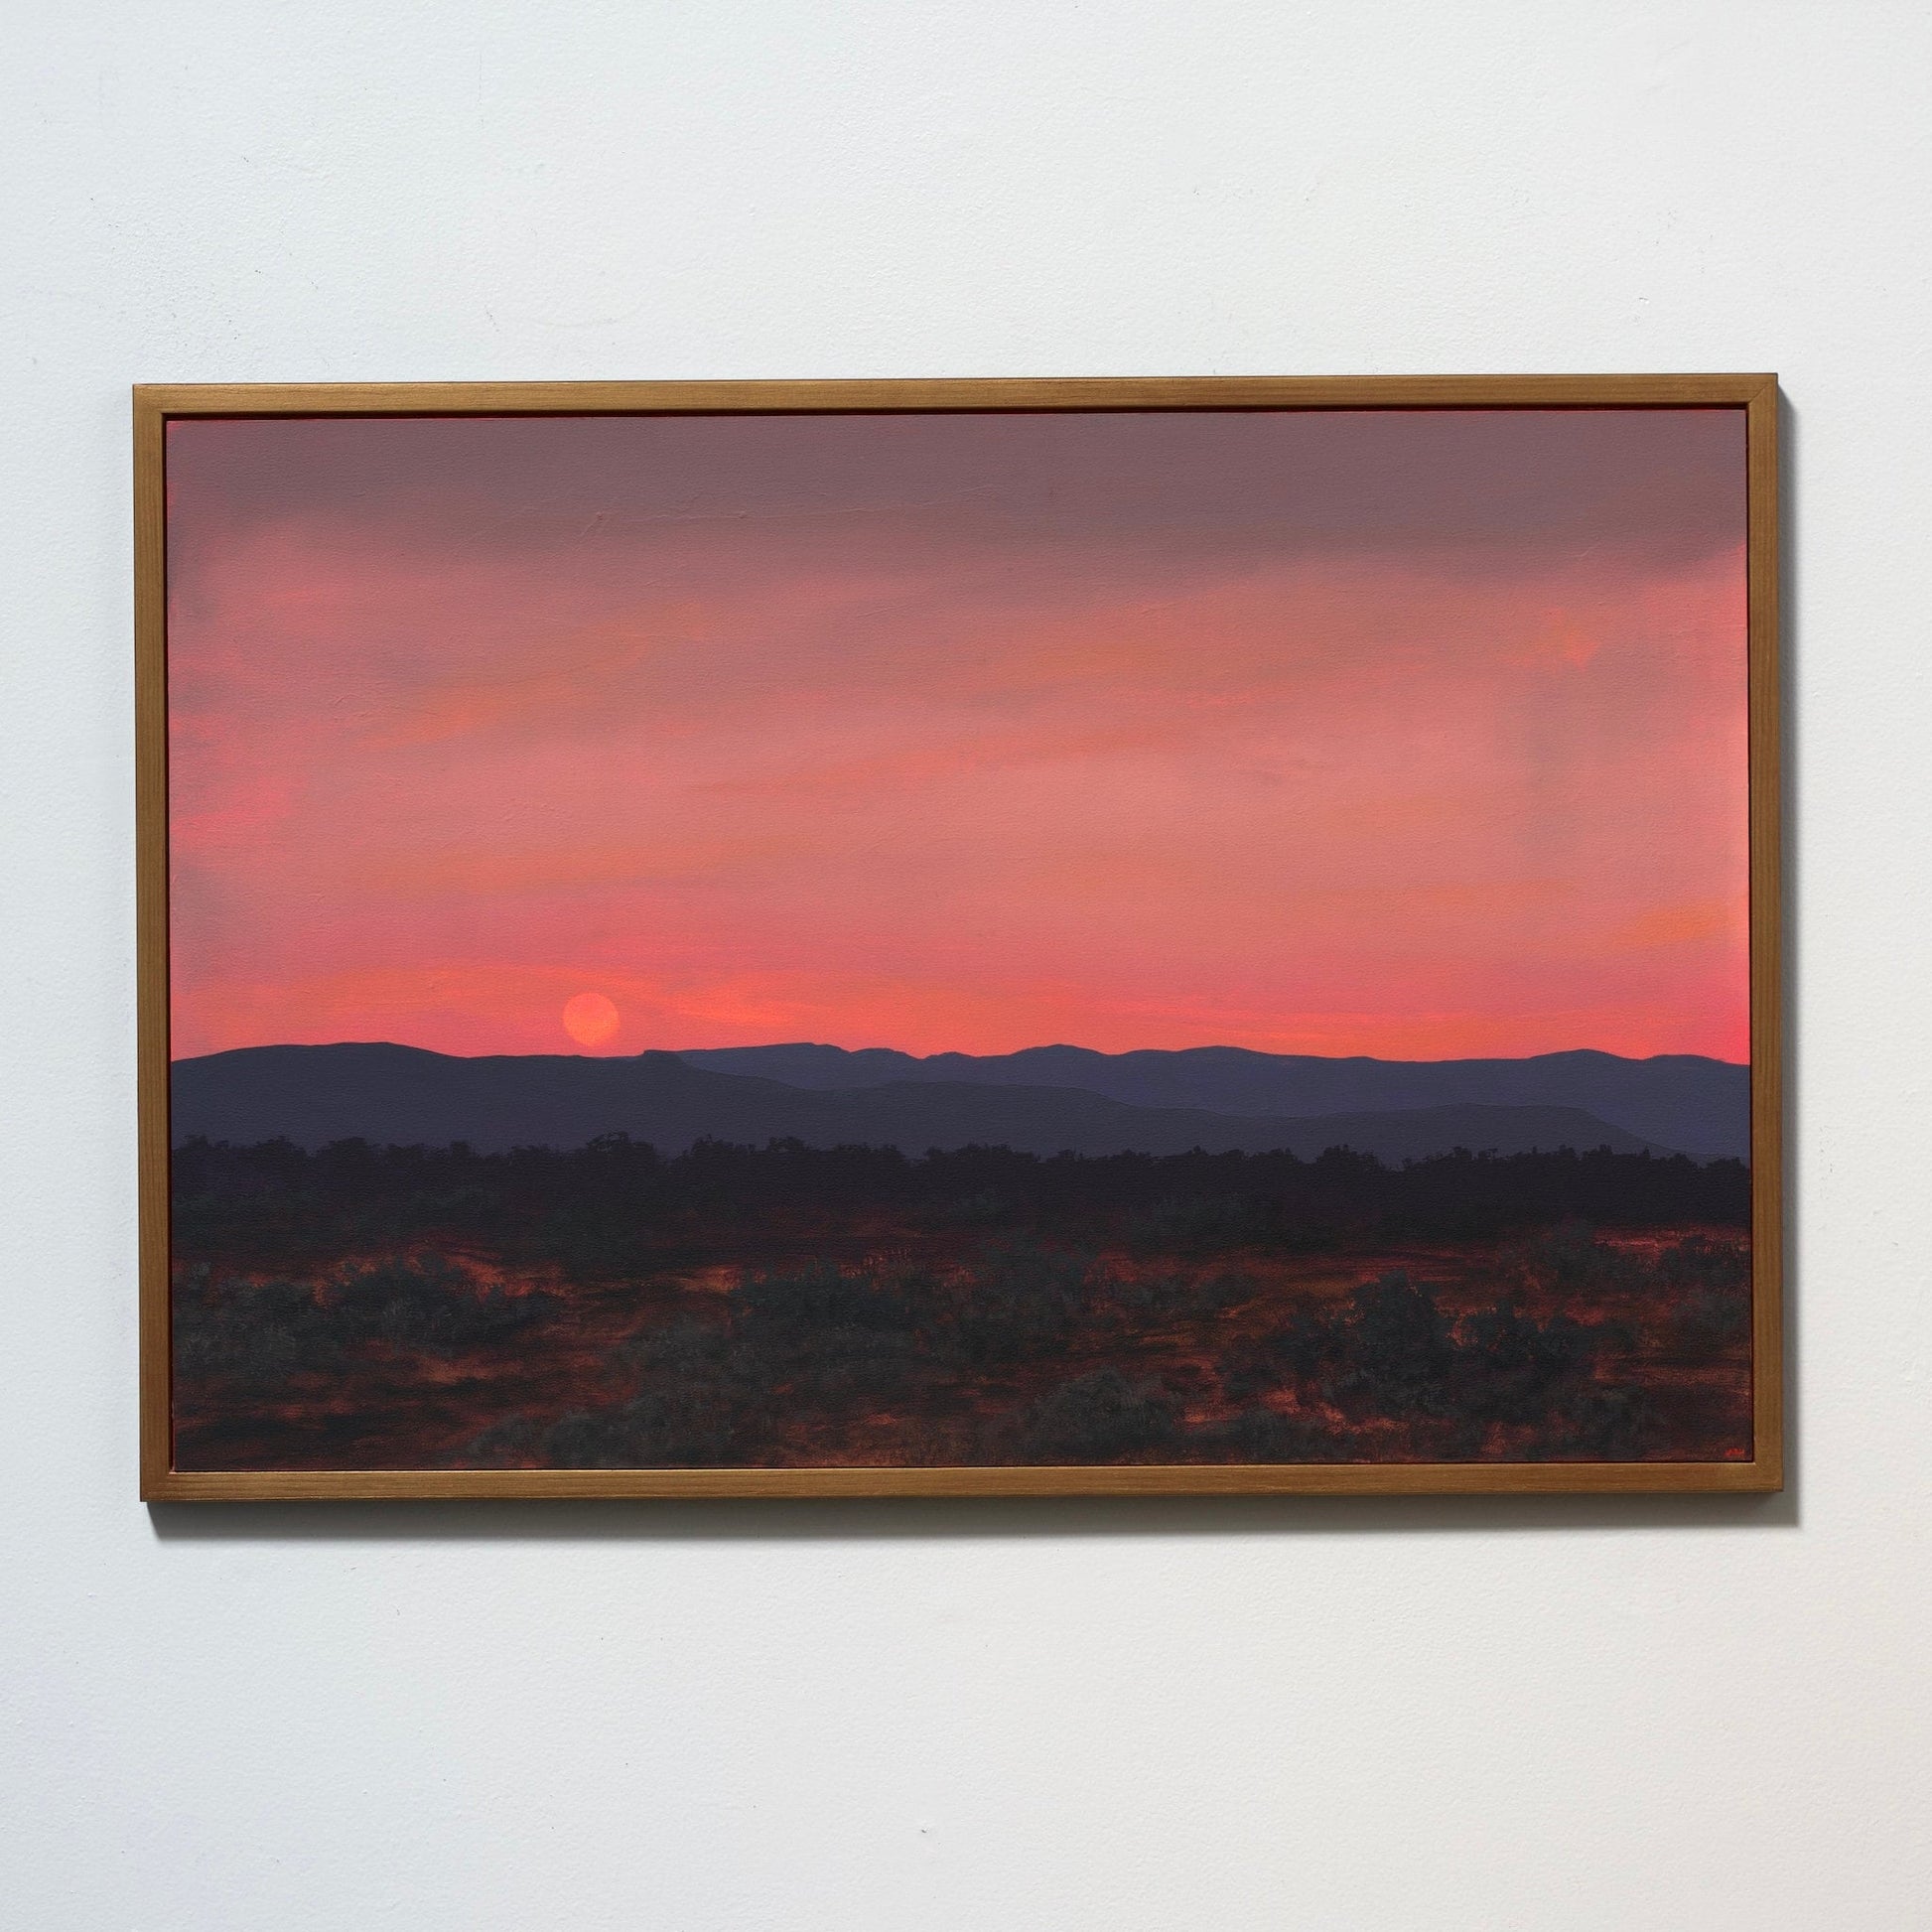 Jemez Series 7, No.1 - Original Southwest Landscape Oil Painting - 24 x 36 inches in handmade frame